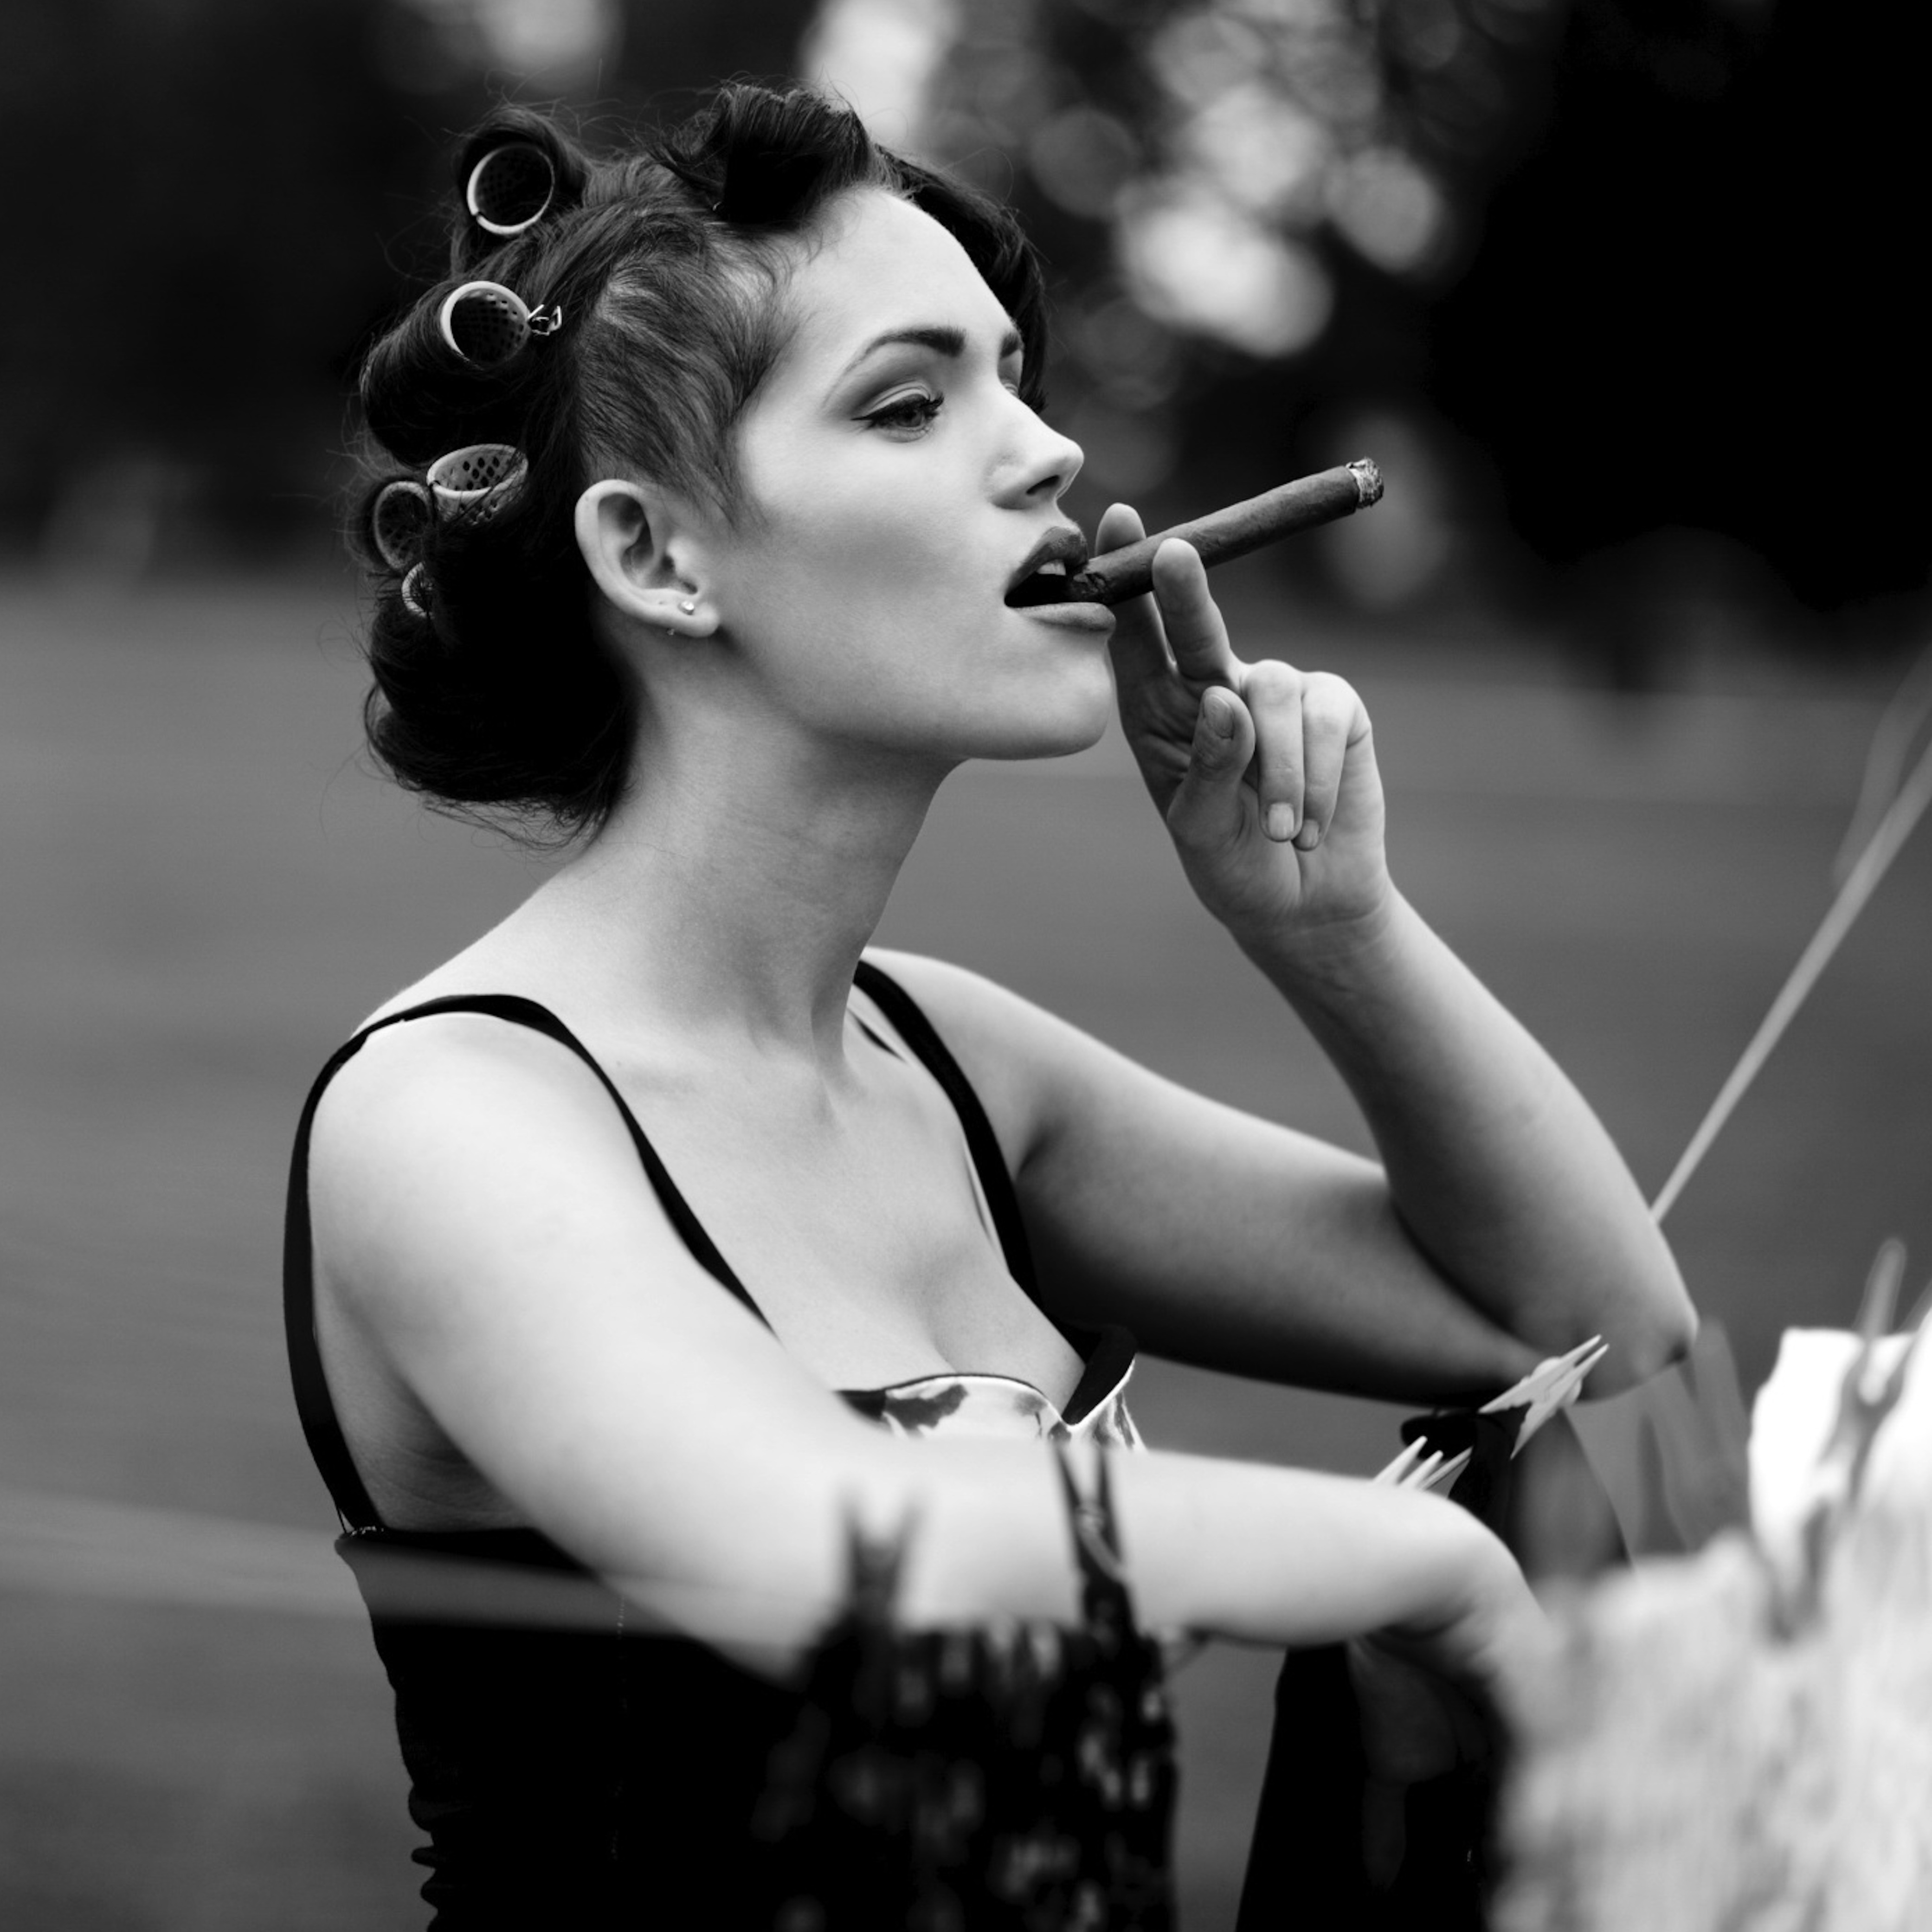 Песни tv girl cigarettes. Анджелина Джоли с сигаретой. Анджелина Джоли фотосессия с сигаретой. Анджелина Джоли с сигарой. Девушка с сигарой.